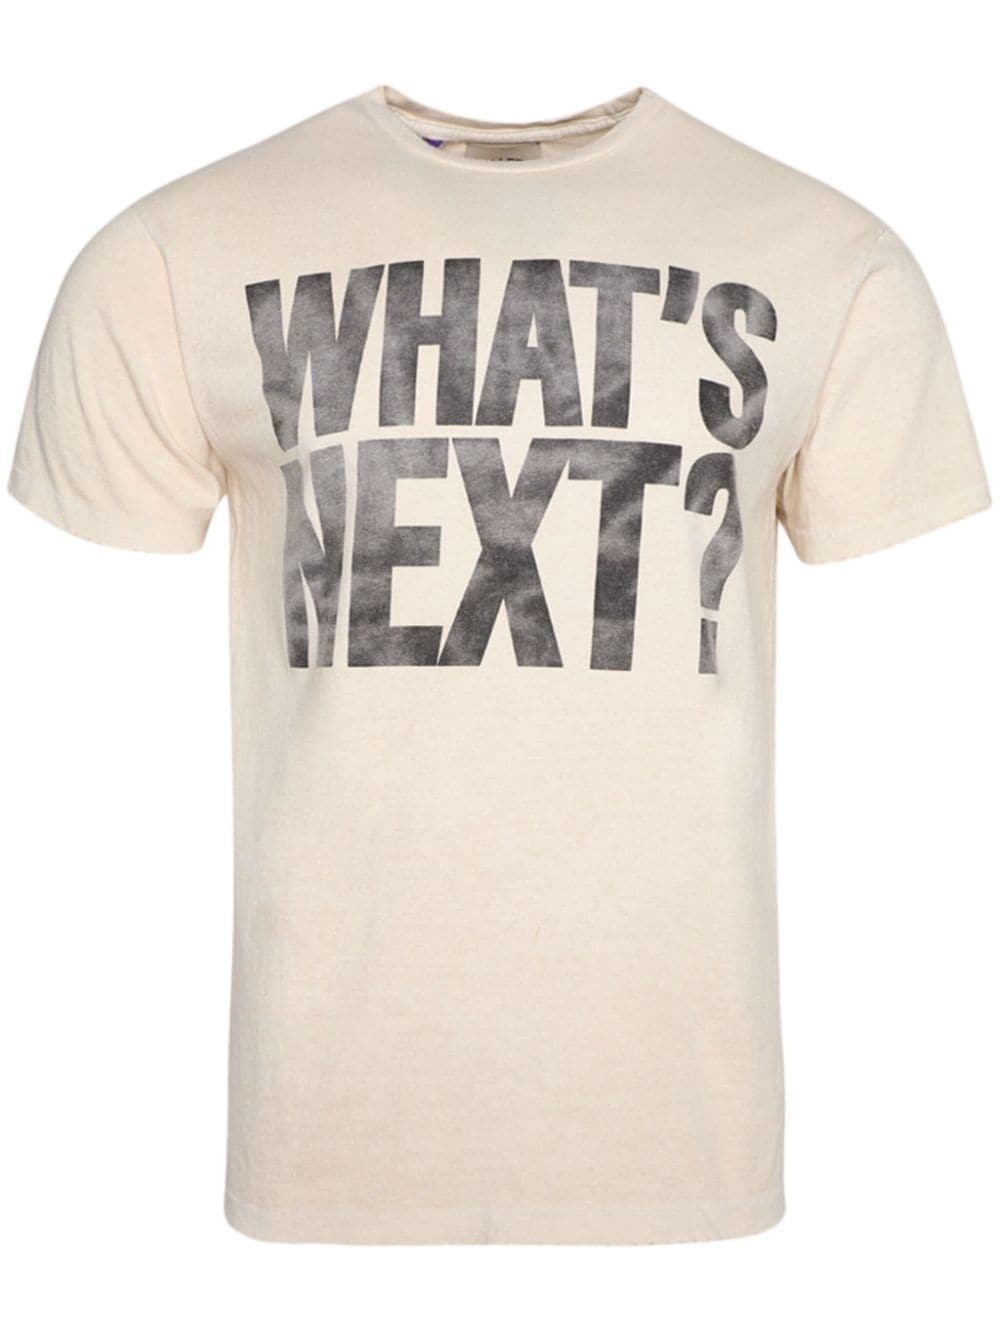 Whats Next cotton T-shirt - 1